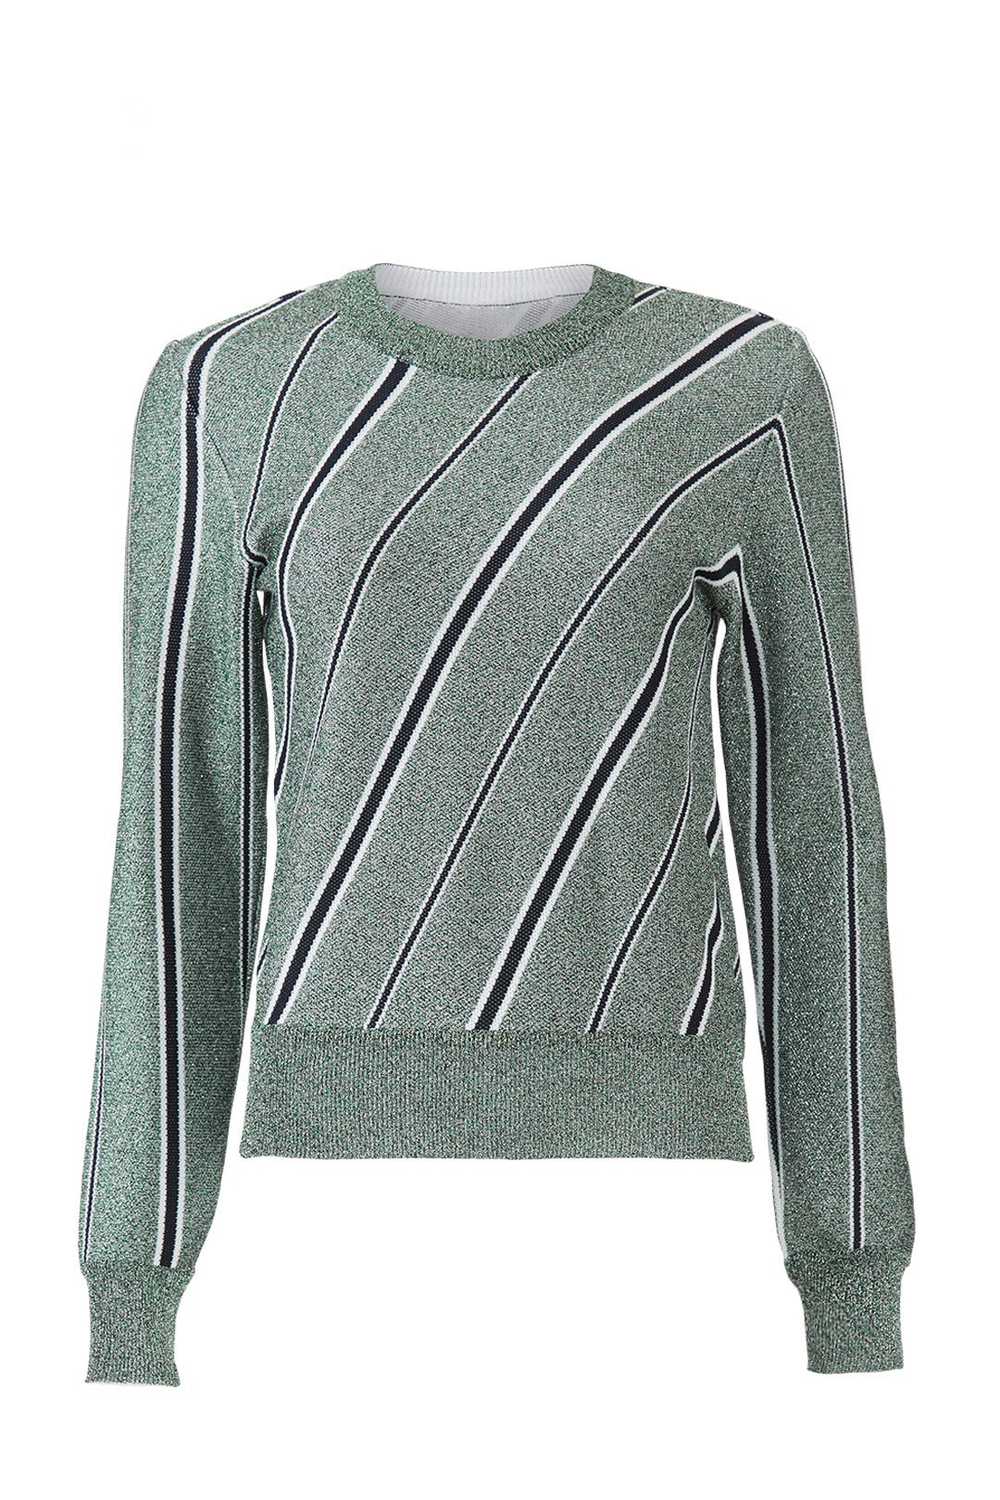 Cedric Charlier Striped Lurex Sweater - image 4